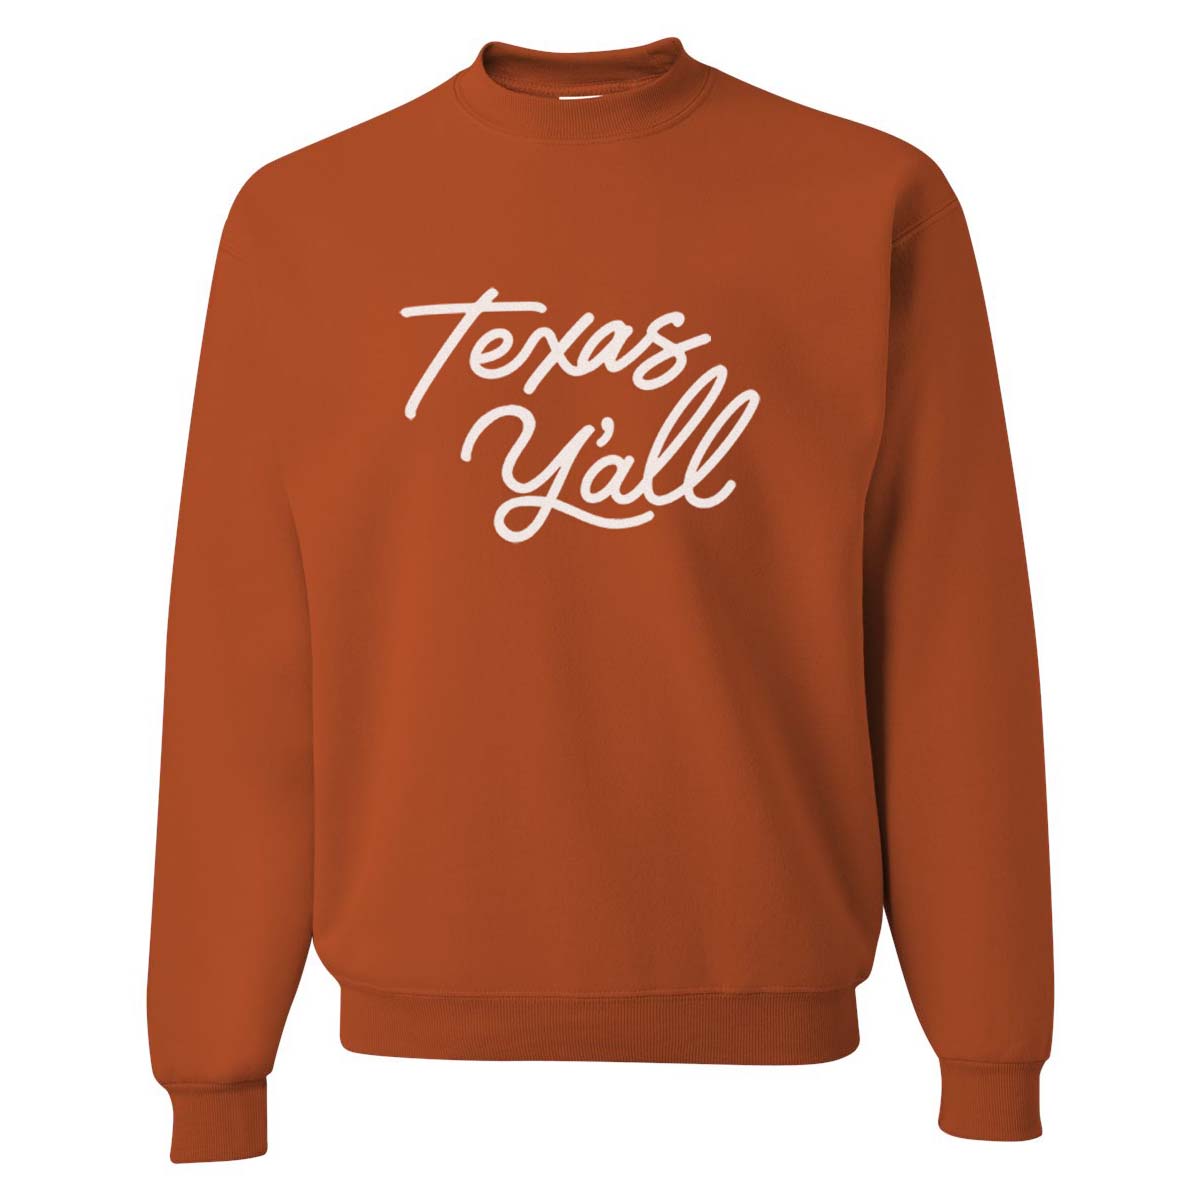 Texas Y'all Sweatshirt Overstock